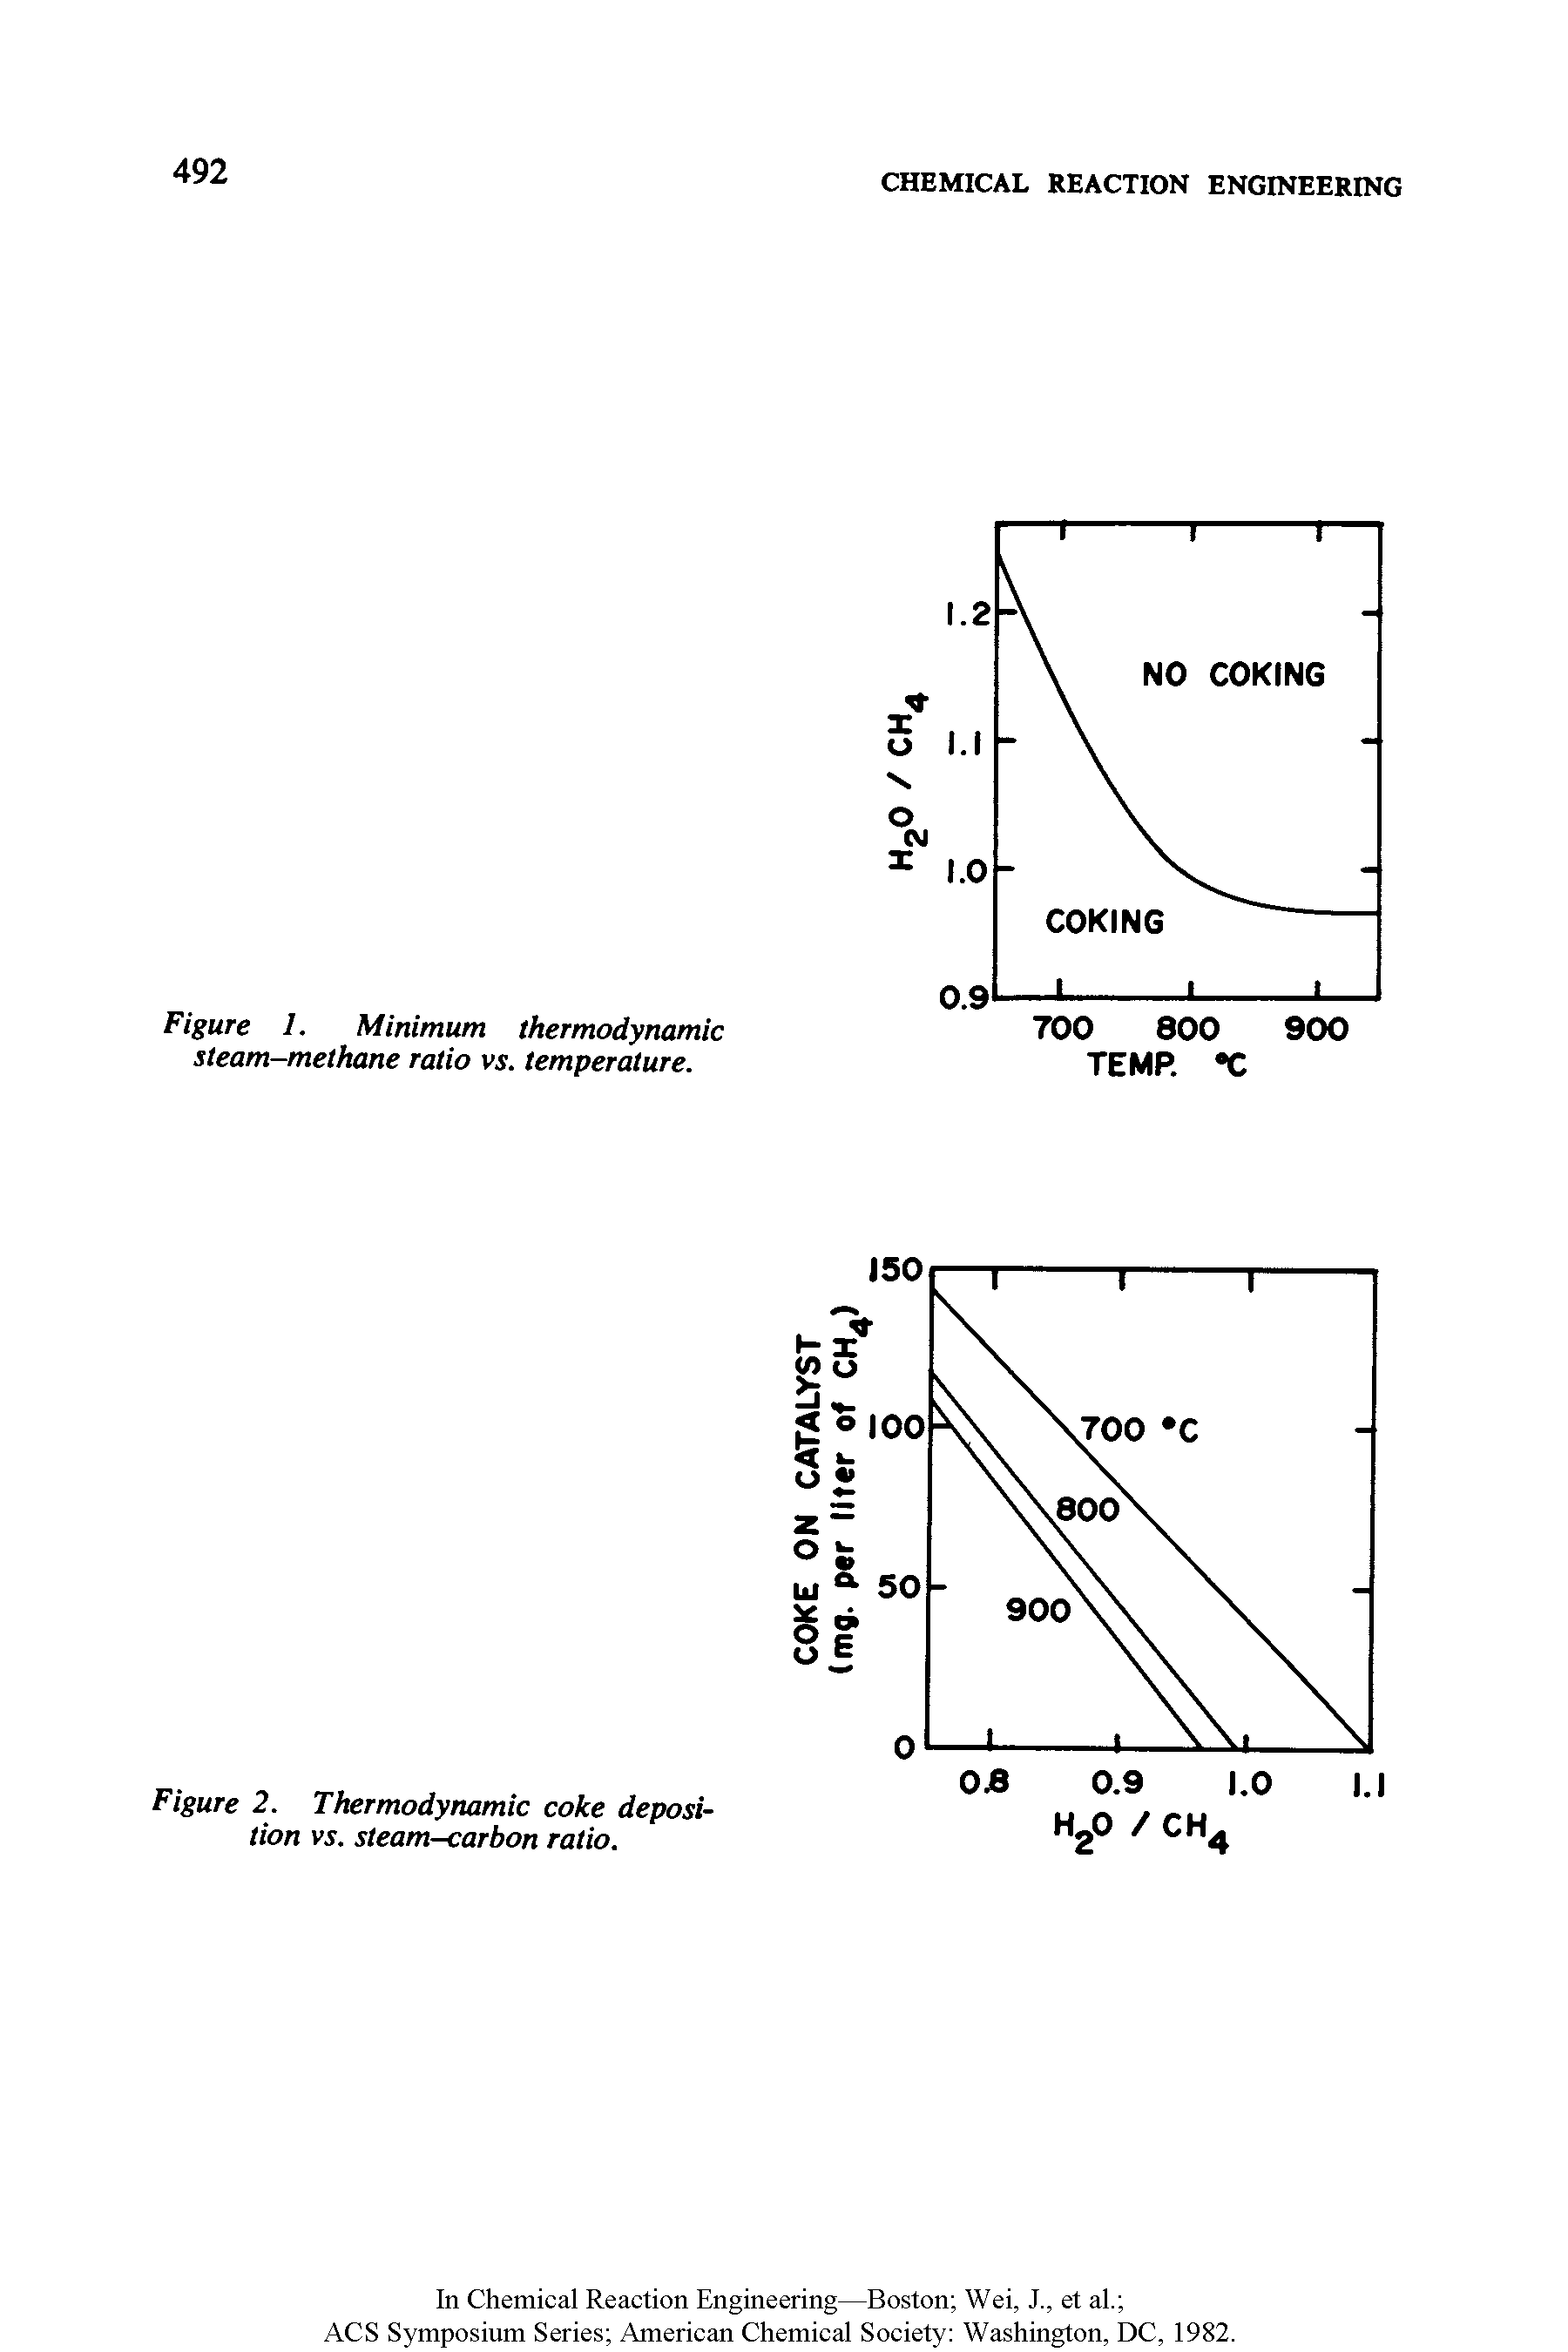 Figure 2. Thermodynamic coke deposition vs. steam-carbon ratio.